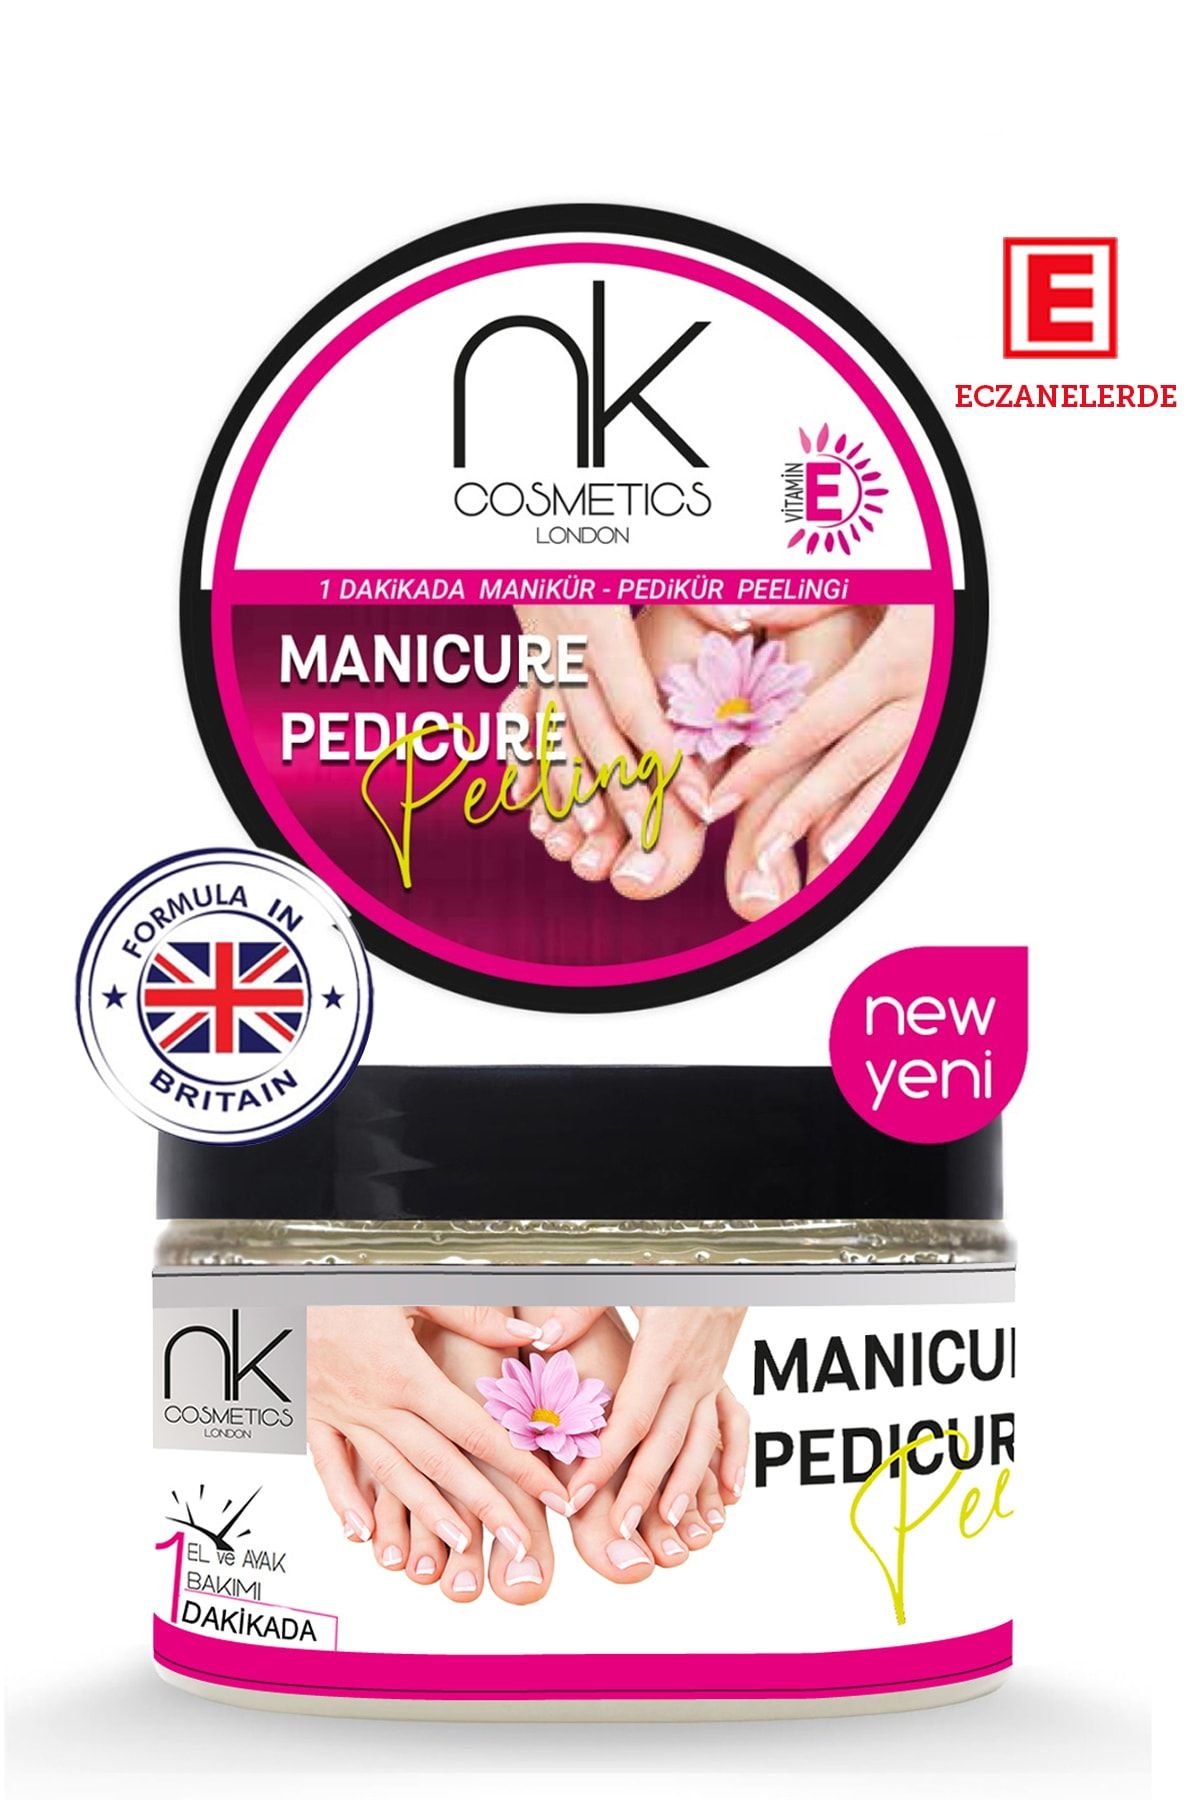 NK Cosmetics E Vitaminli Kolay Manikür & Pedikür Peeling 300 gr